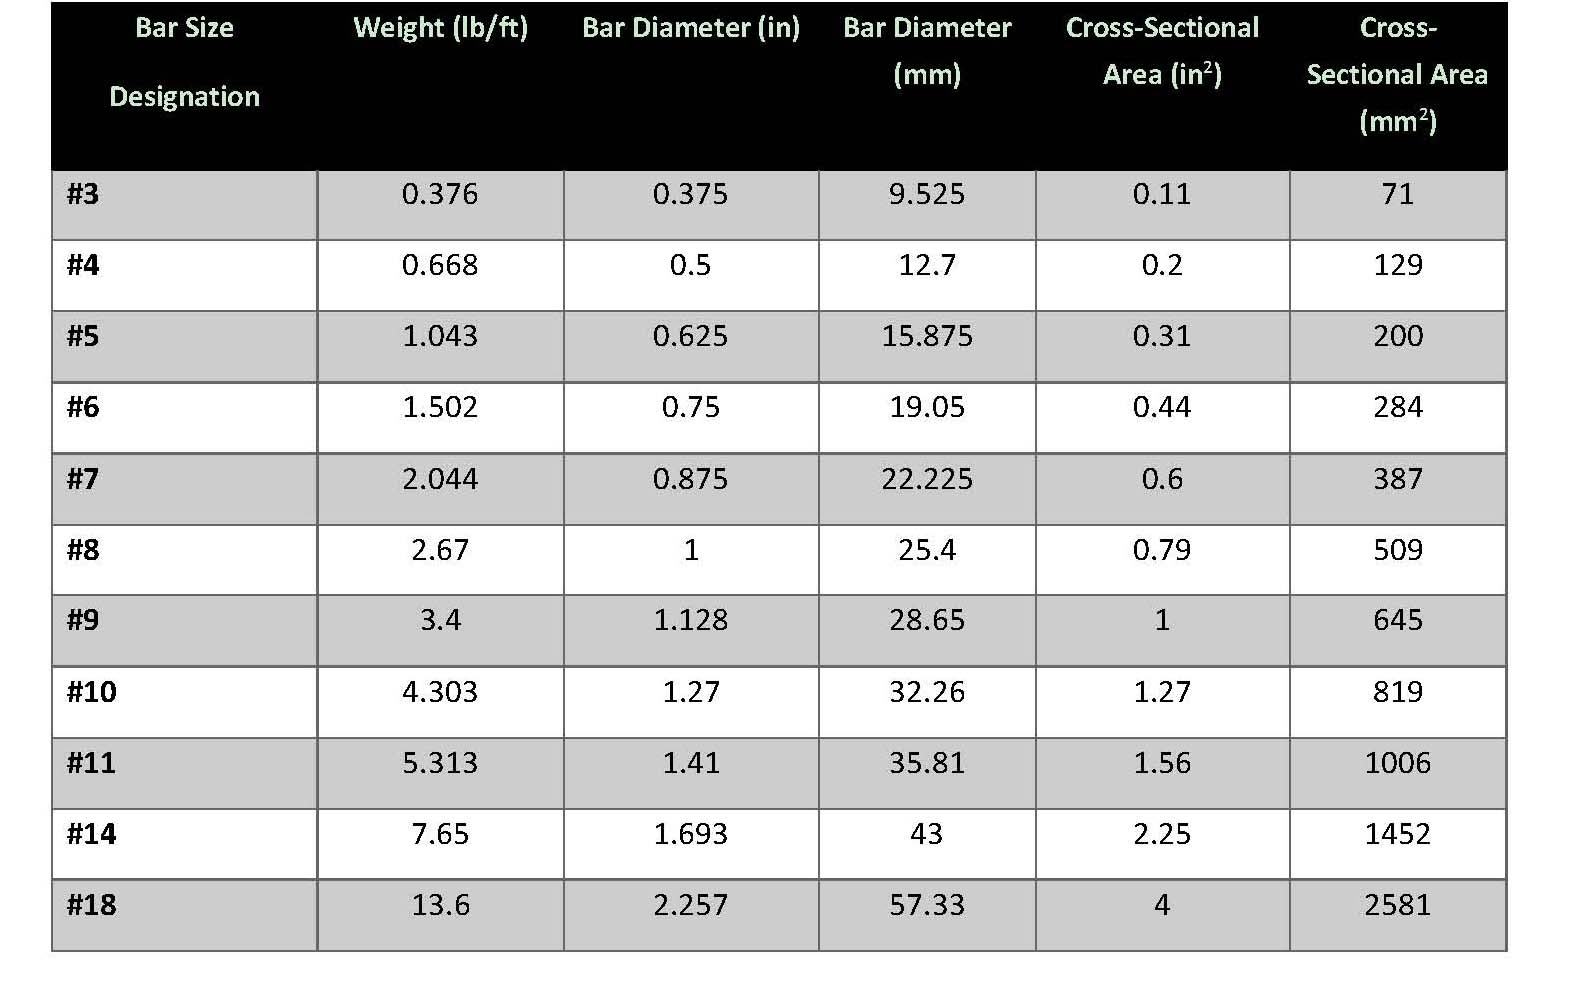 rebar size chart, Rebar bar size bar weight for different